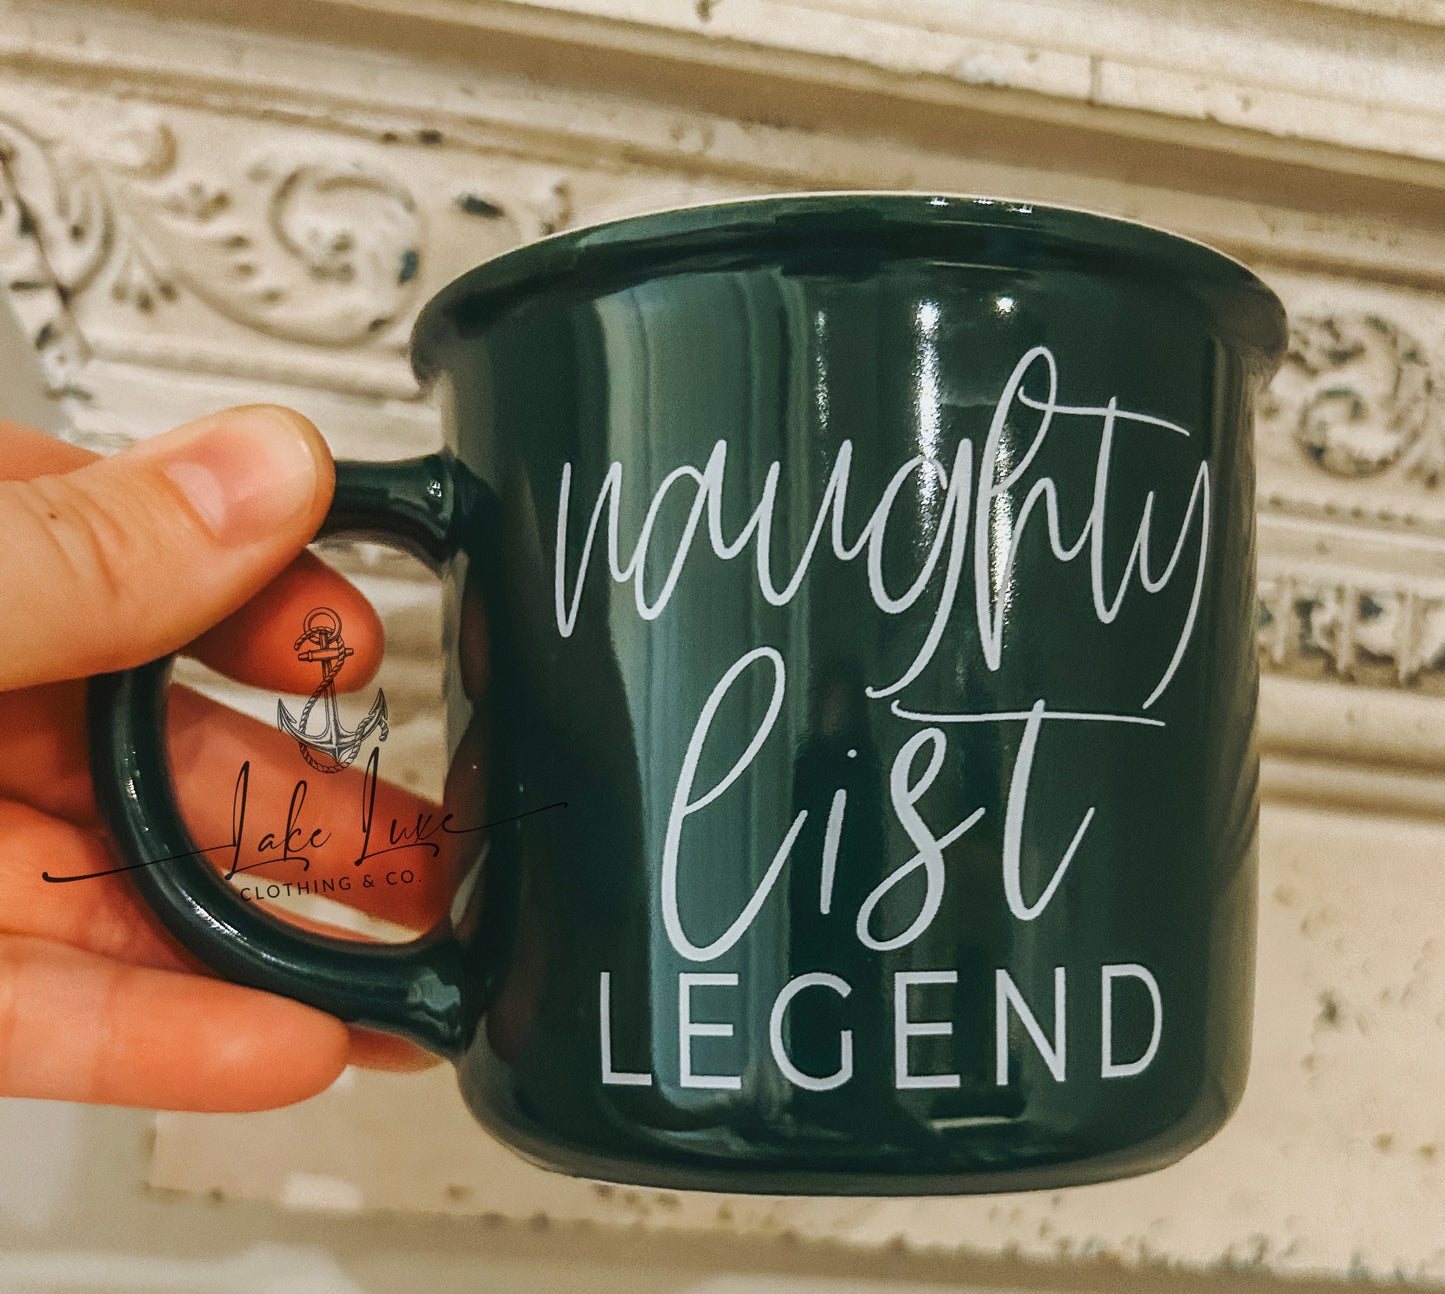 Naughty list legend coffee mug